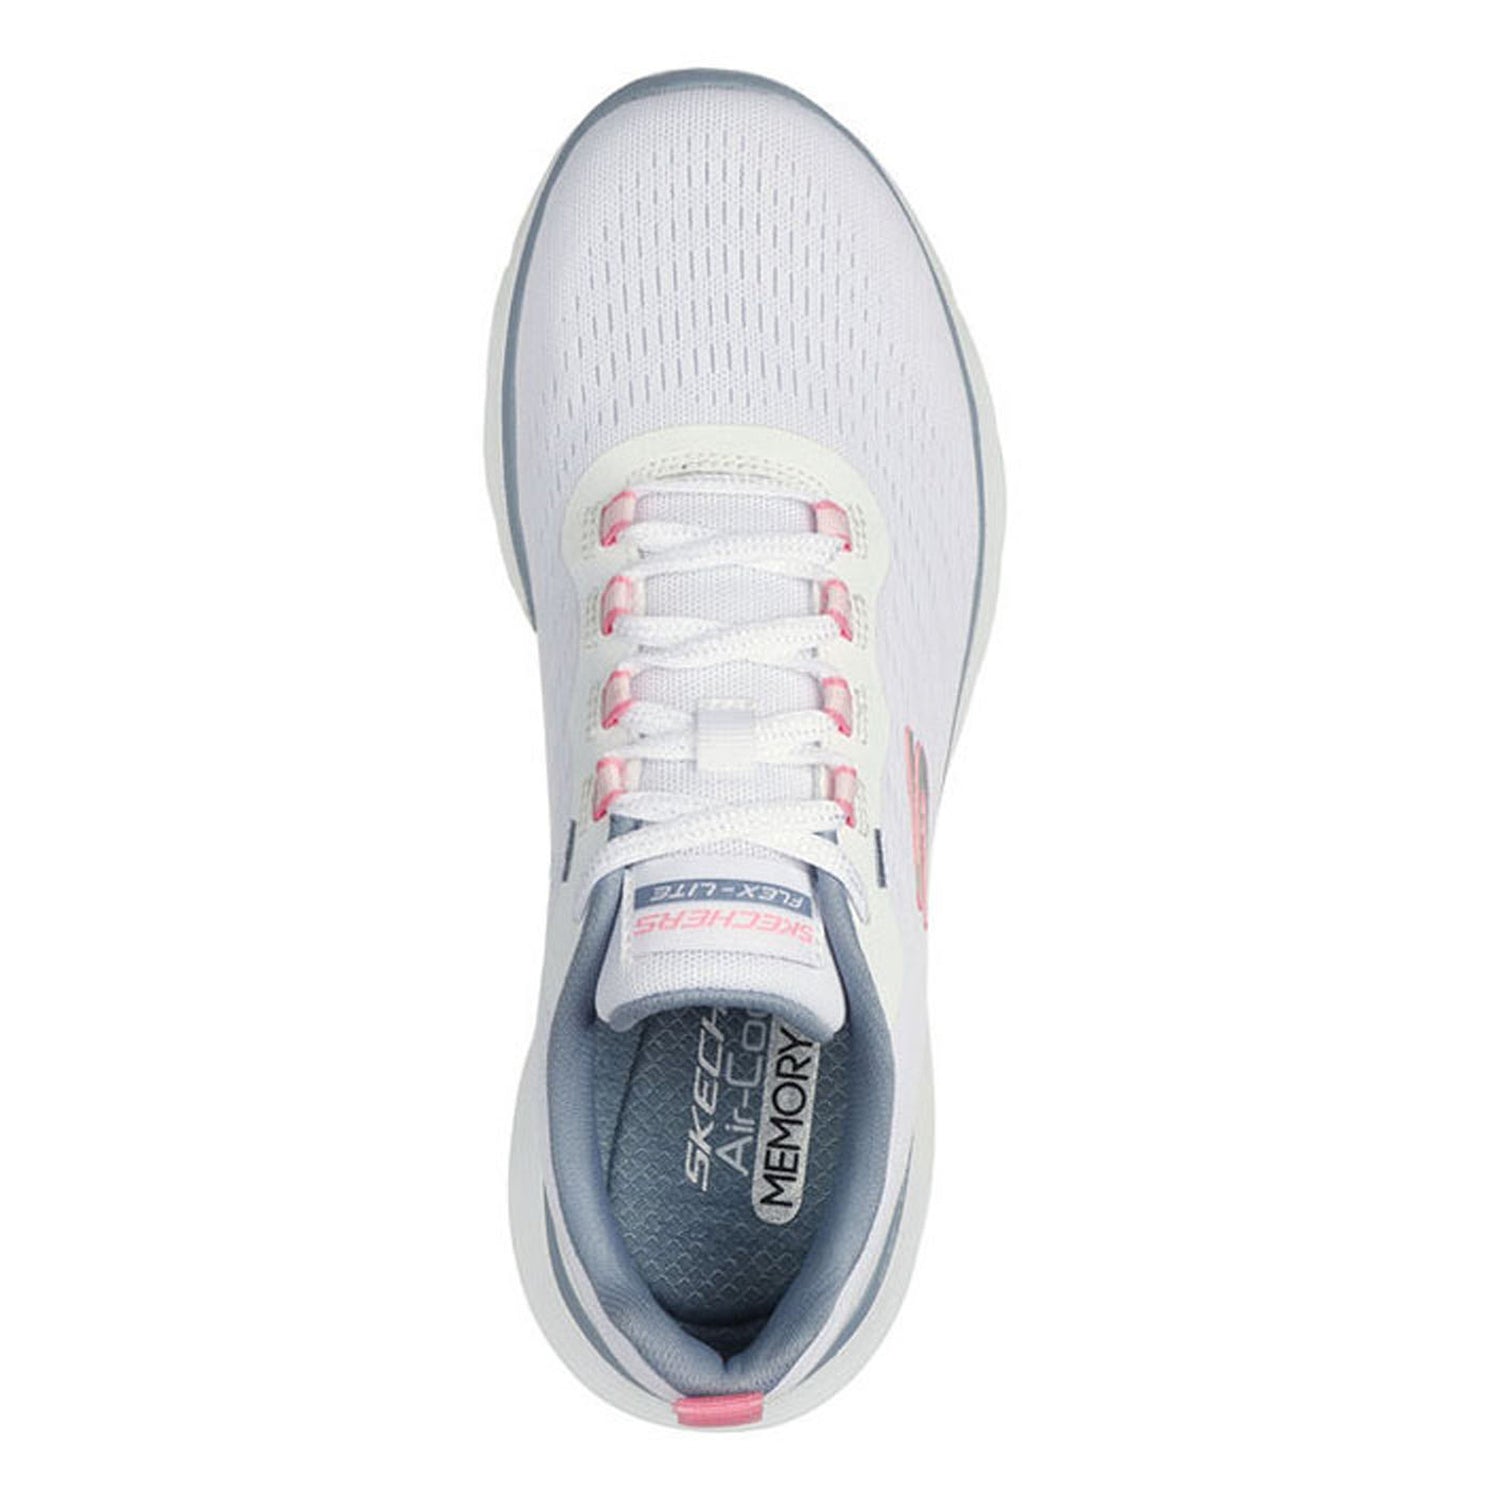 Skechers Flex Appeal - Sweet Spot Women's Blue/Hot Pink Shoes - Free  Returns at